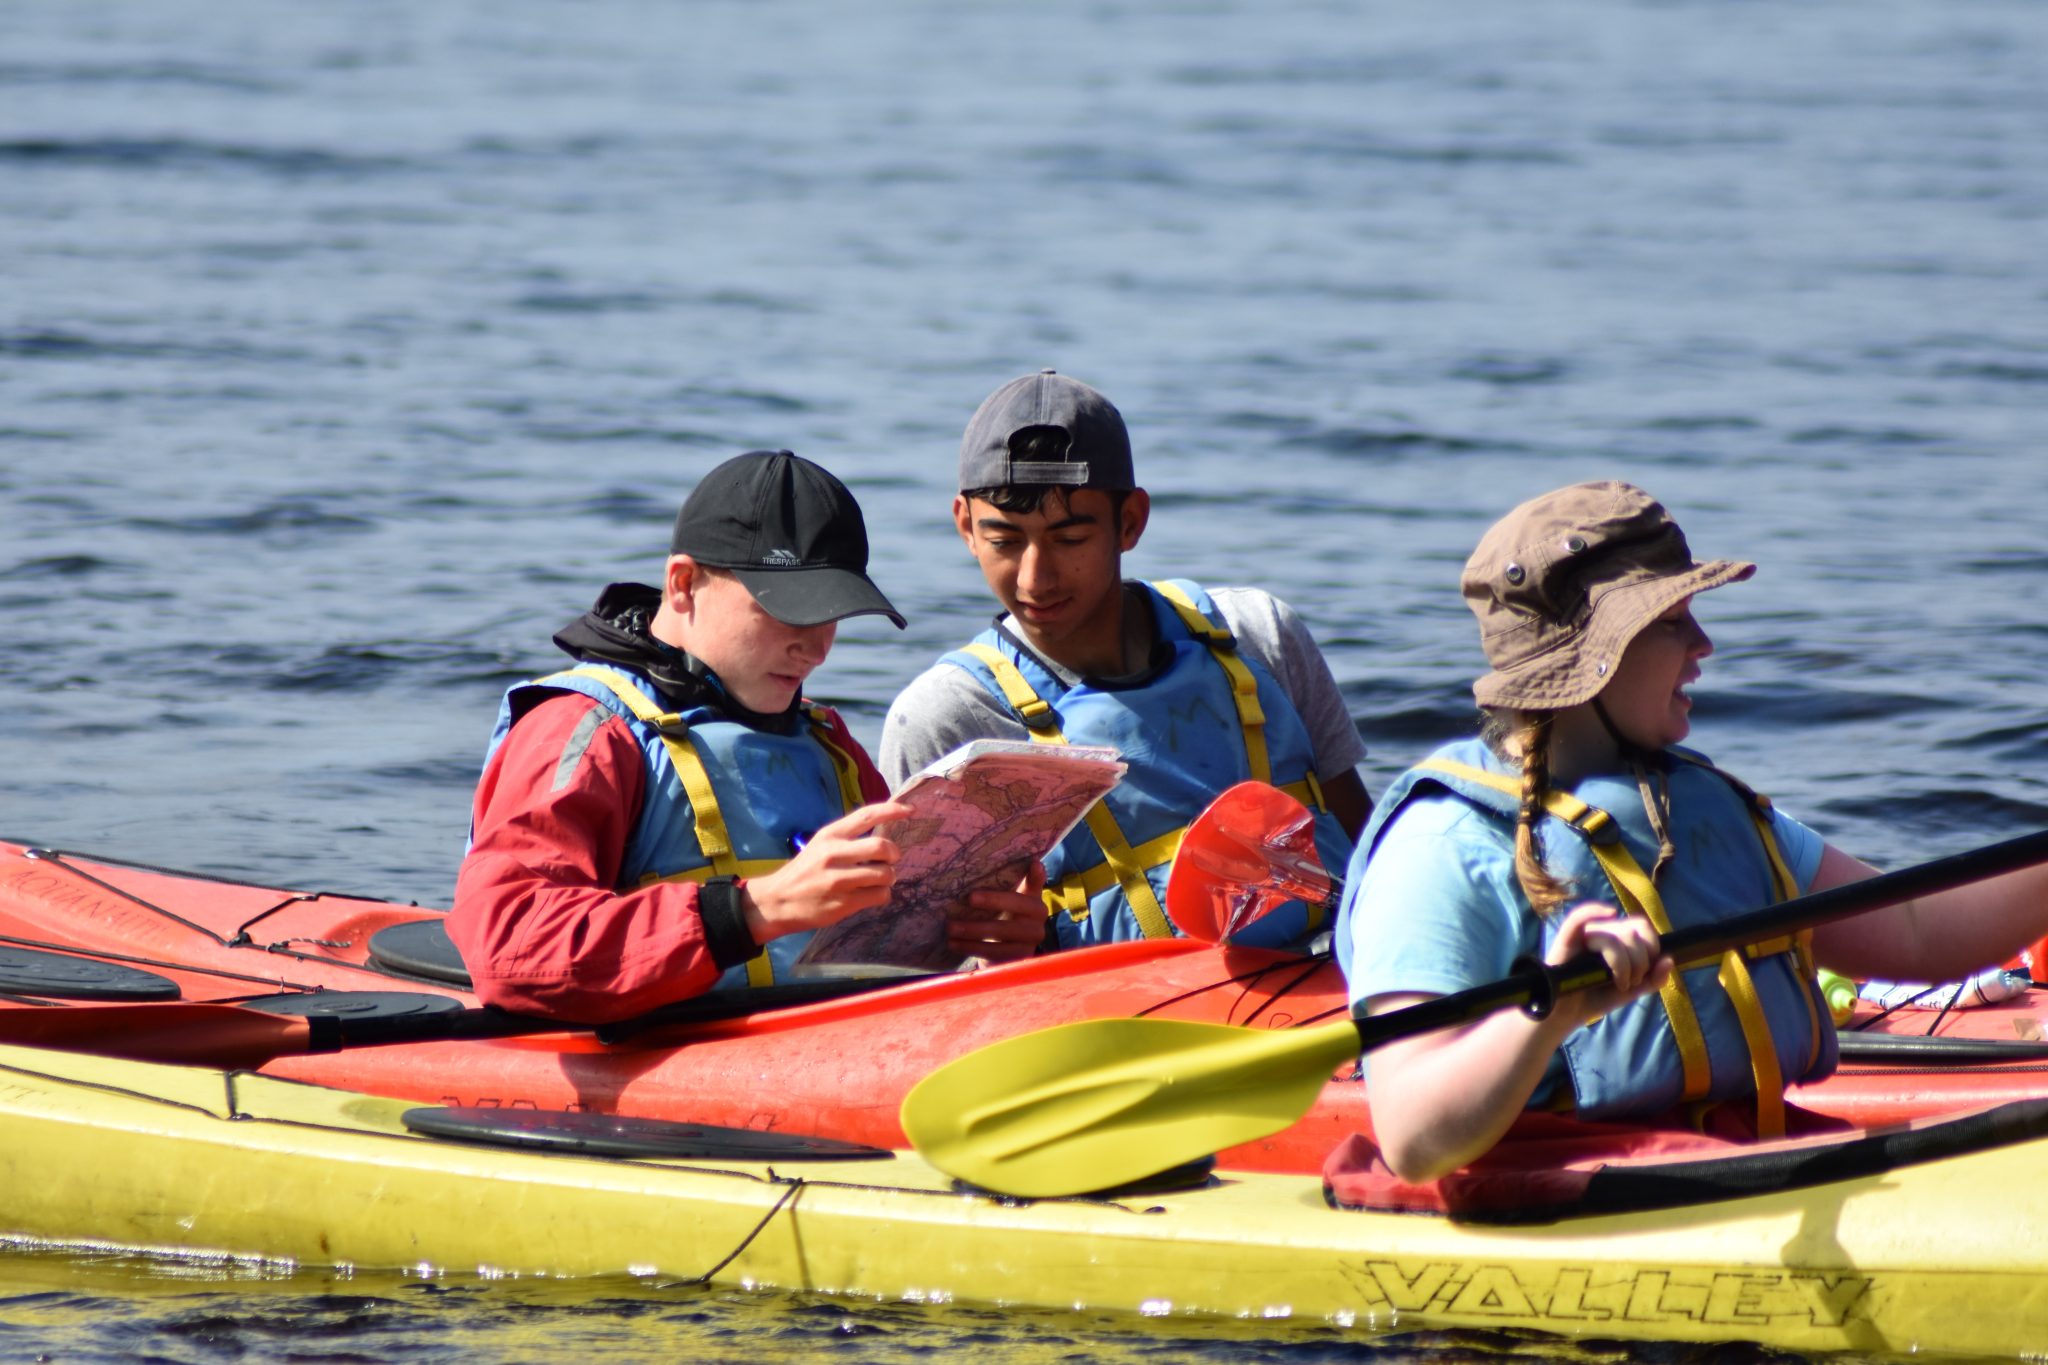 Duke of Edinburgh's Award, Gold Dofe Sea kayaking expeditions for schools in Scotland - DofE